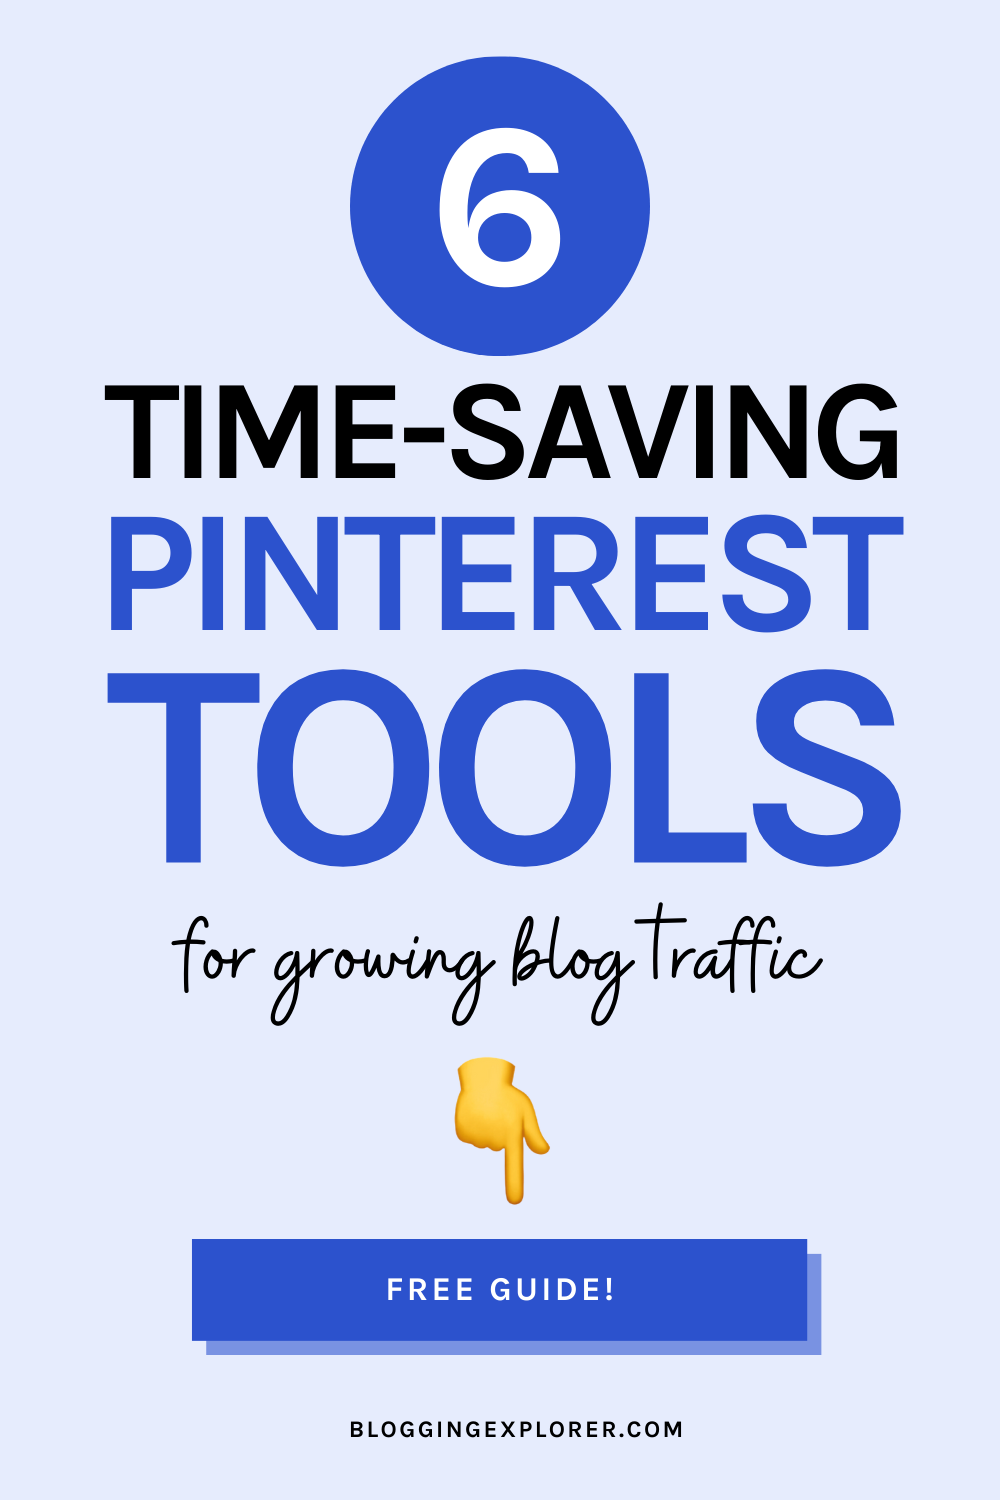 6 time-saving Pinterest tools for growing blog traffic